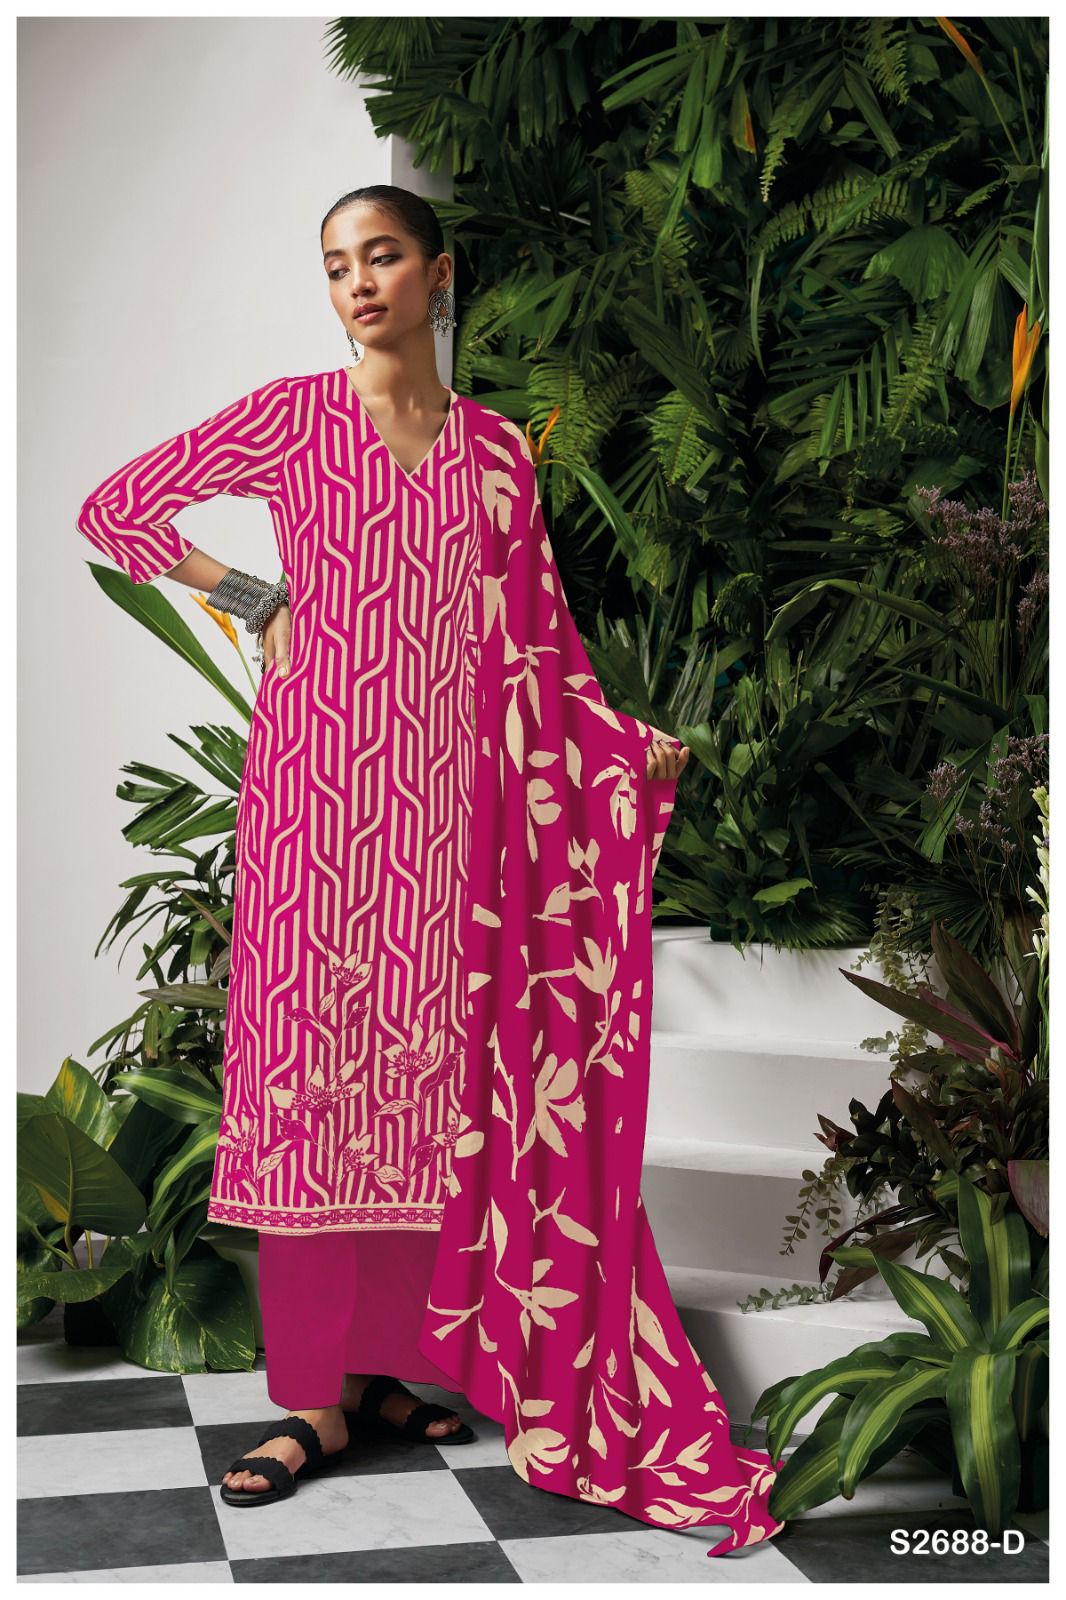 Avika-2688 Ganga Premium Cotton Plazzo Style Suits Manufacturer Ahmedabad